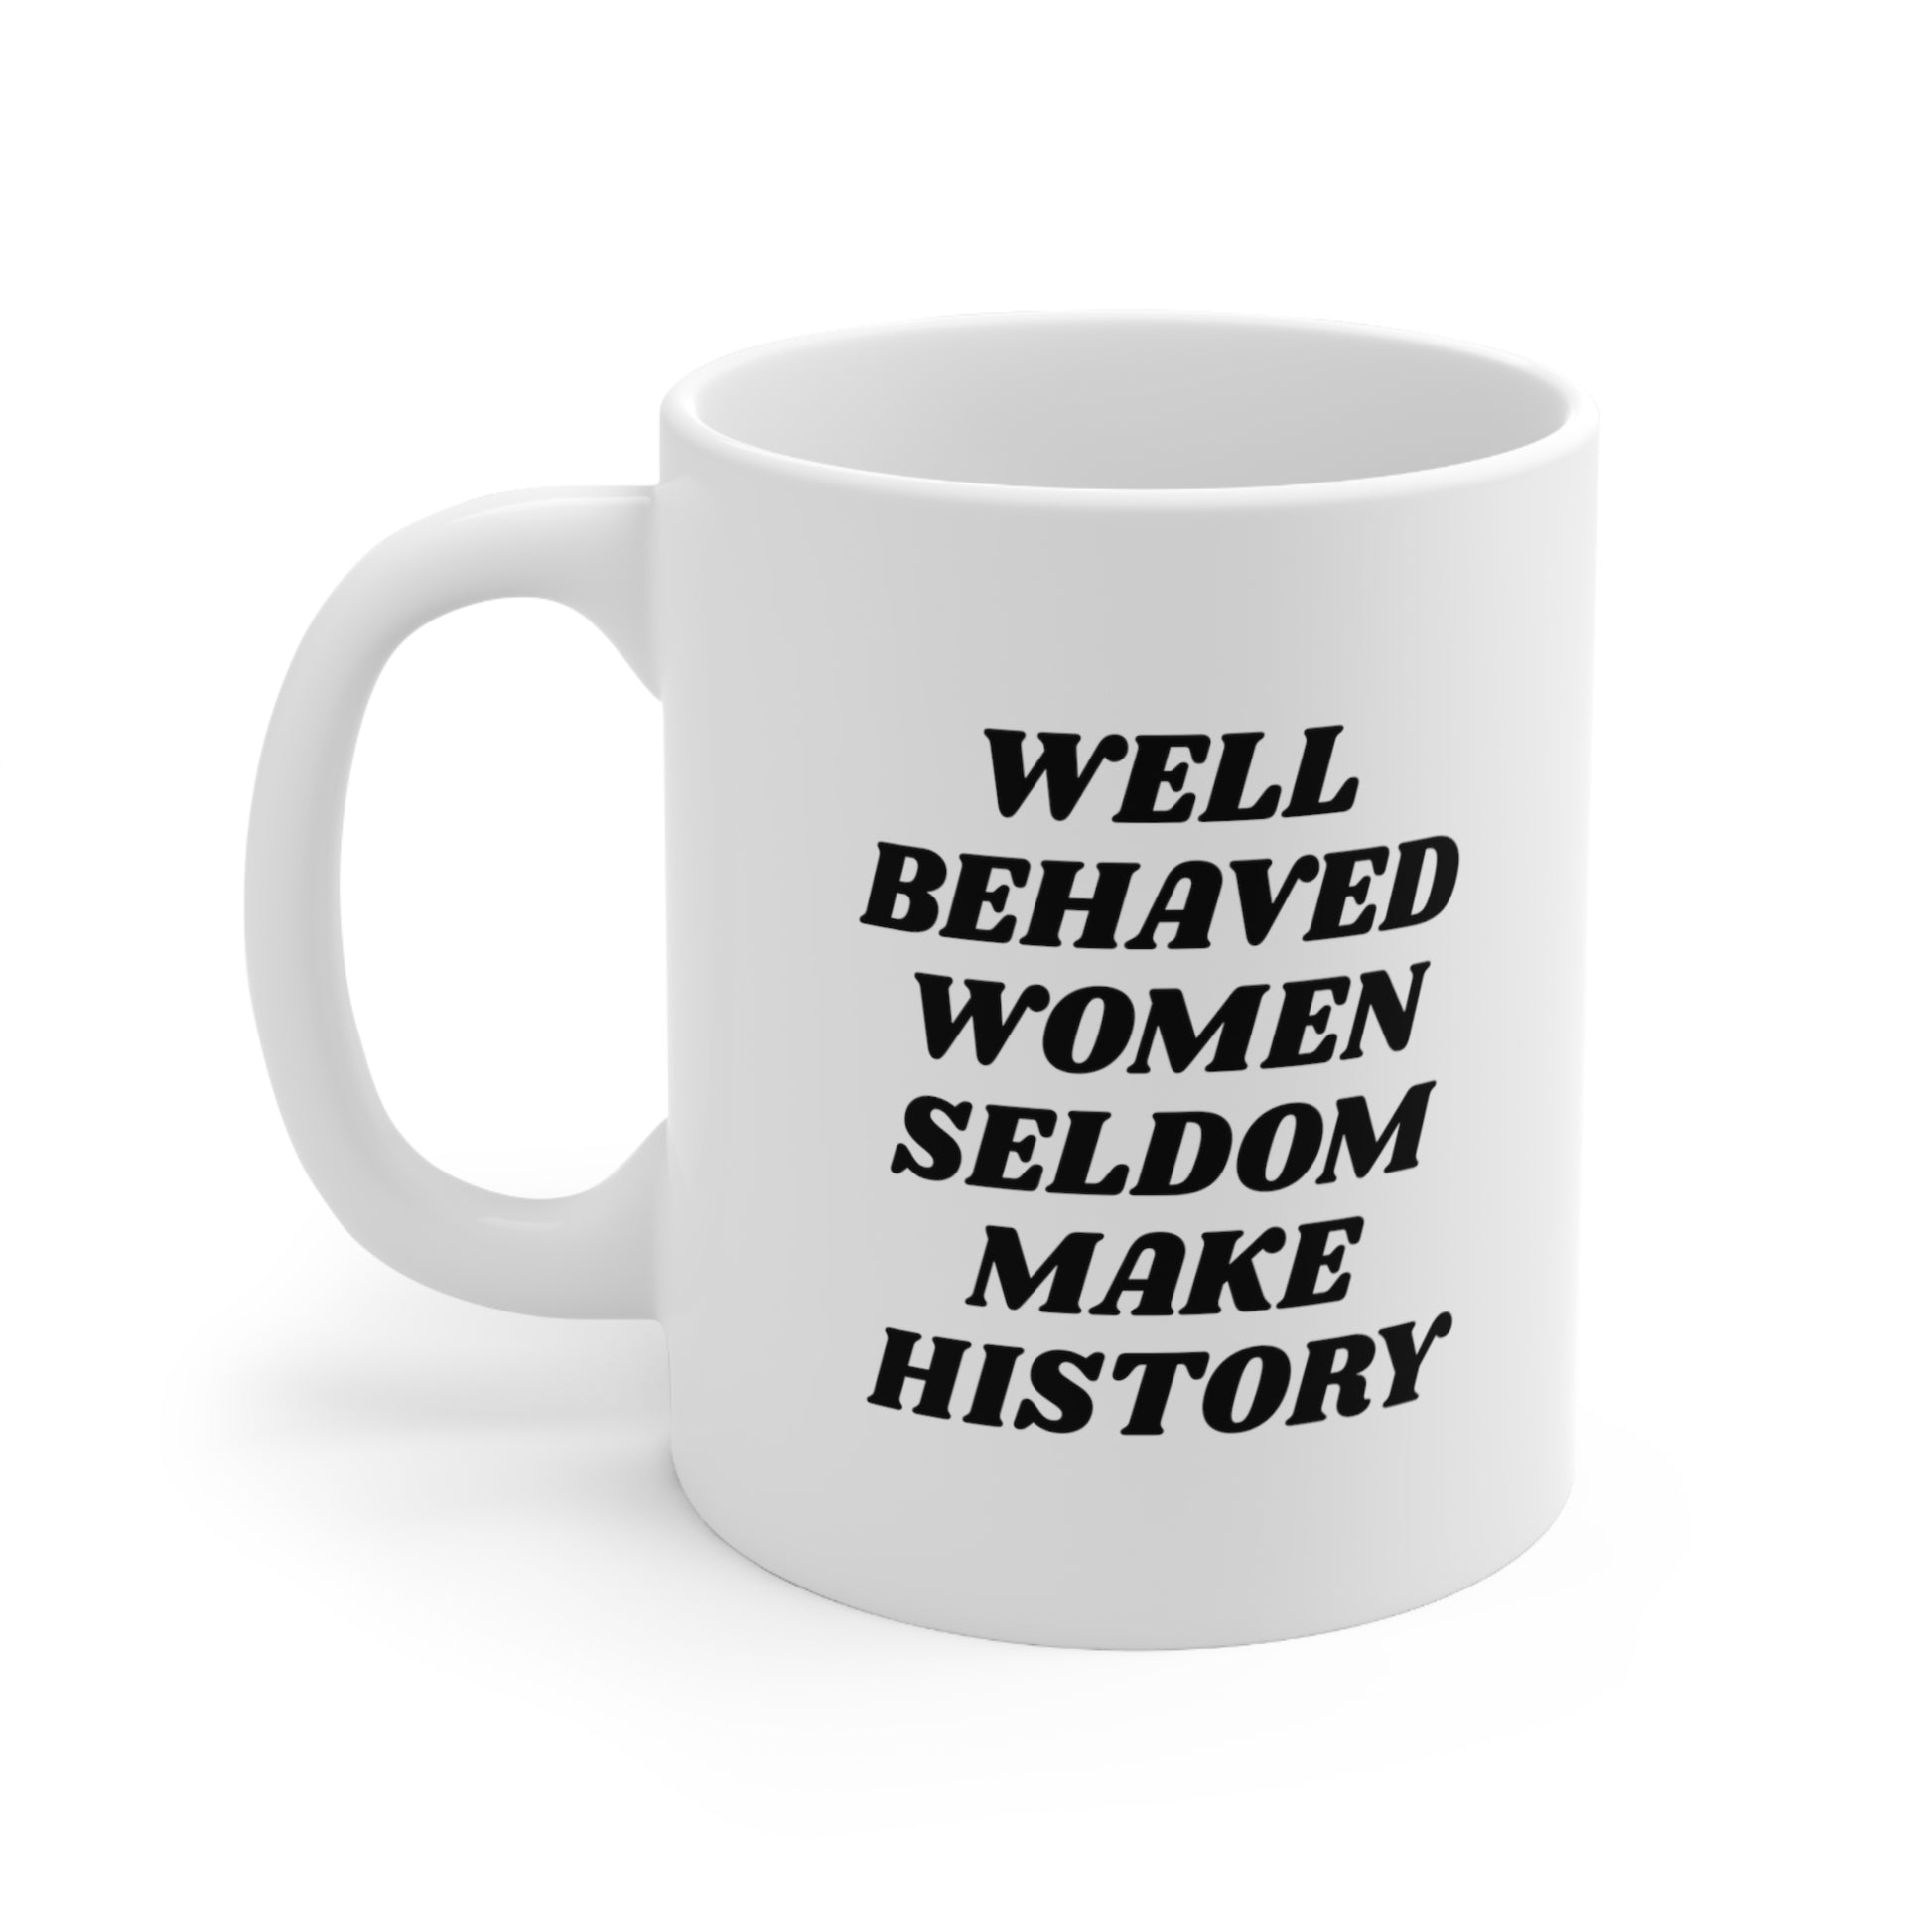 Well behaved women seldom make history Coffee Mug